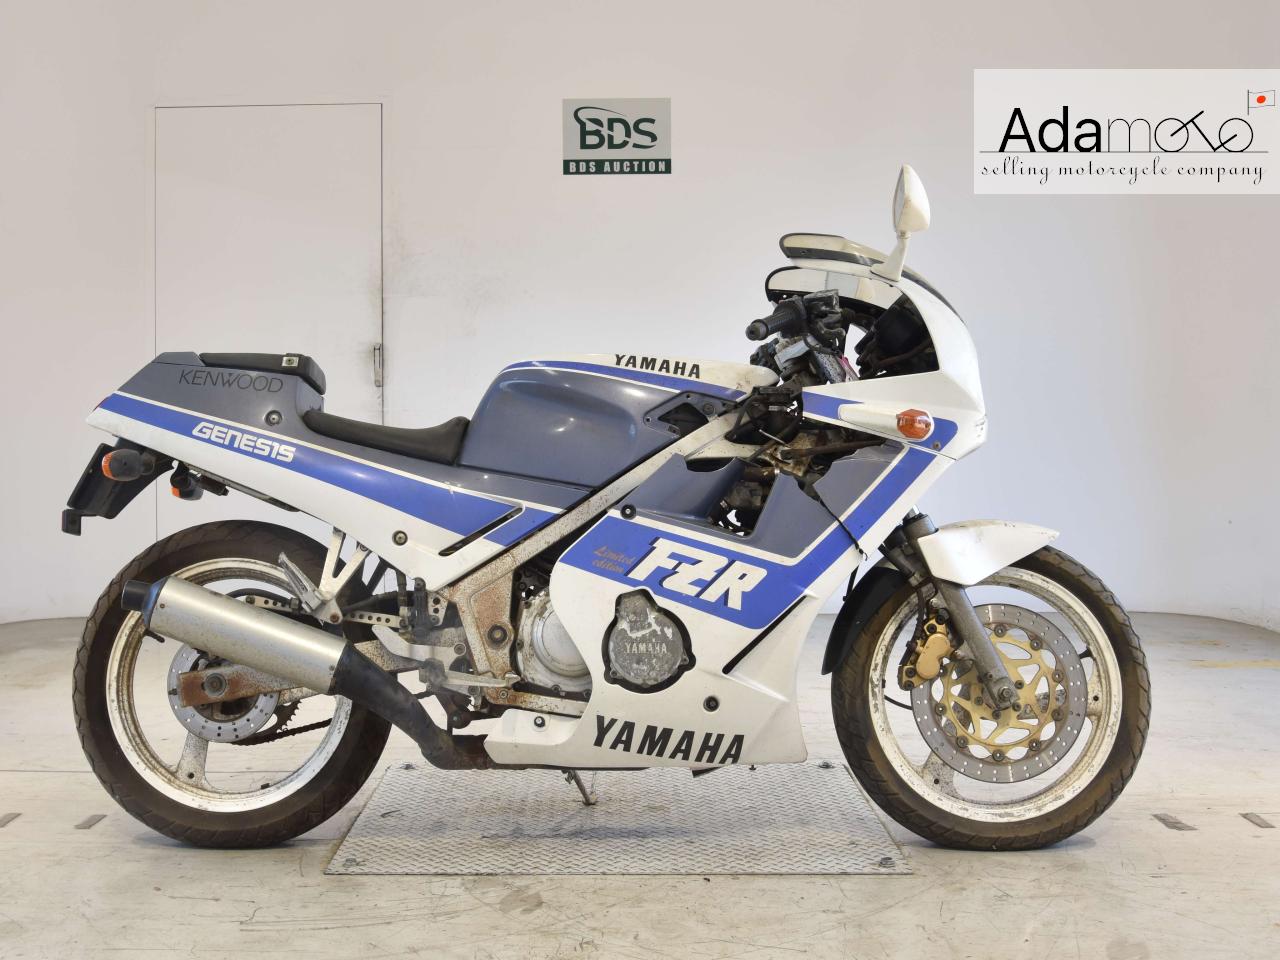 Yamaha FZR250 short - Adamoto - Motorcycles from Japan